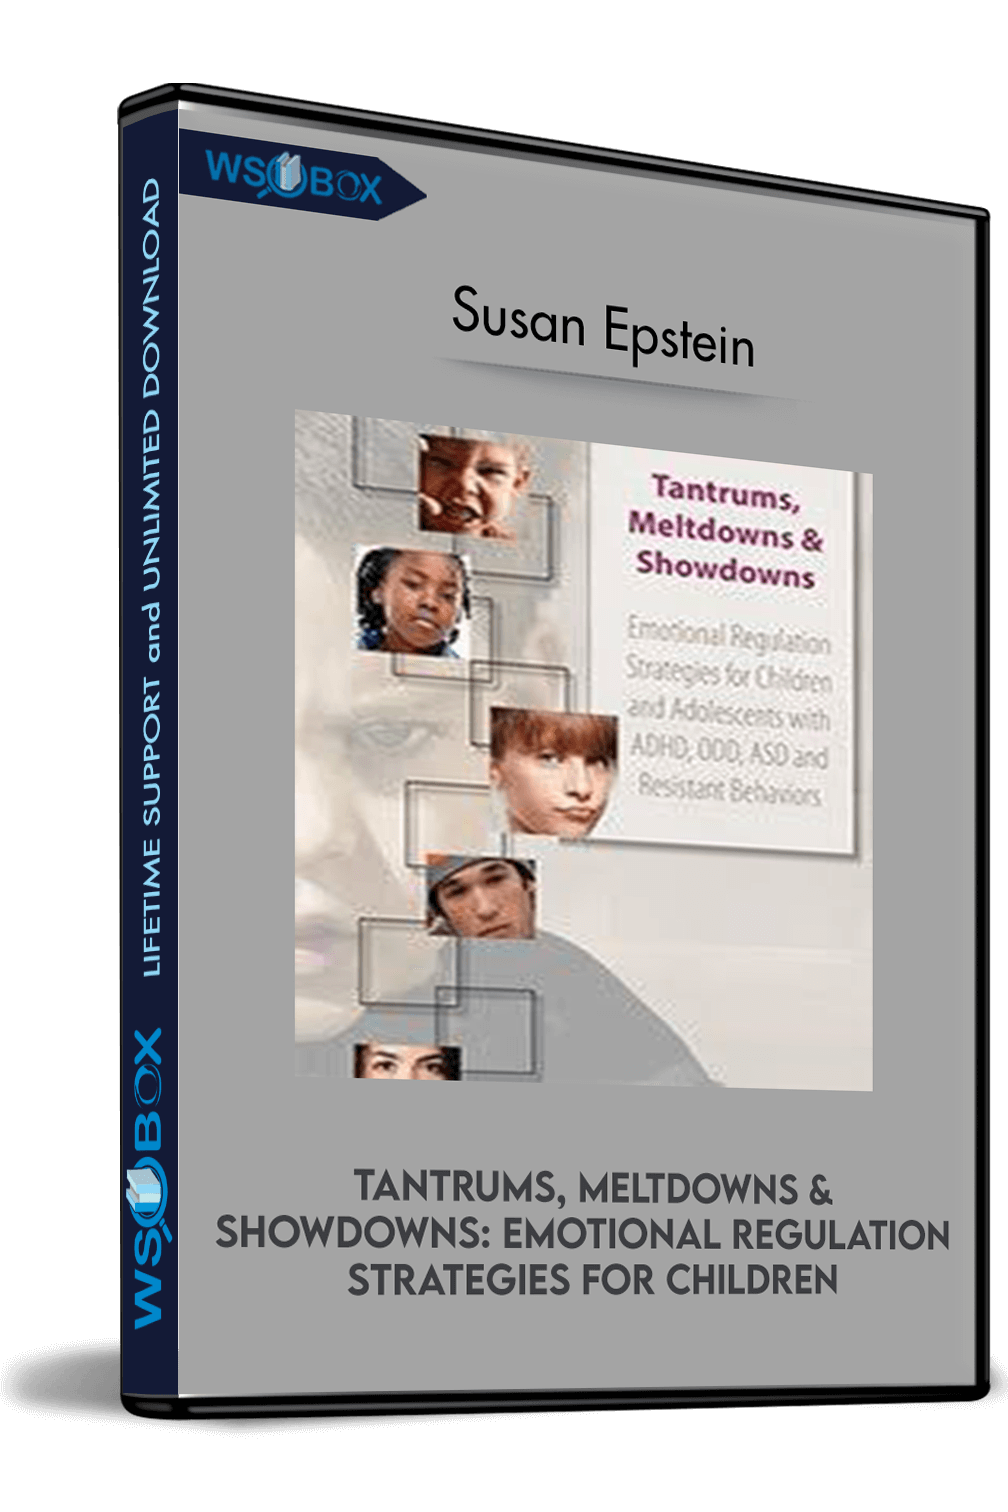 tantrums-meltdowns-showdowns-emotional-regulation-strategies-for-children-adolescents-with-adhd-odd-asd-and-resistant-behaviors-susan-epstein